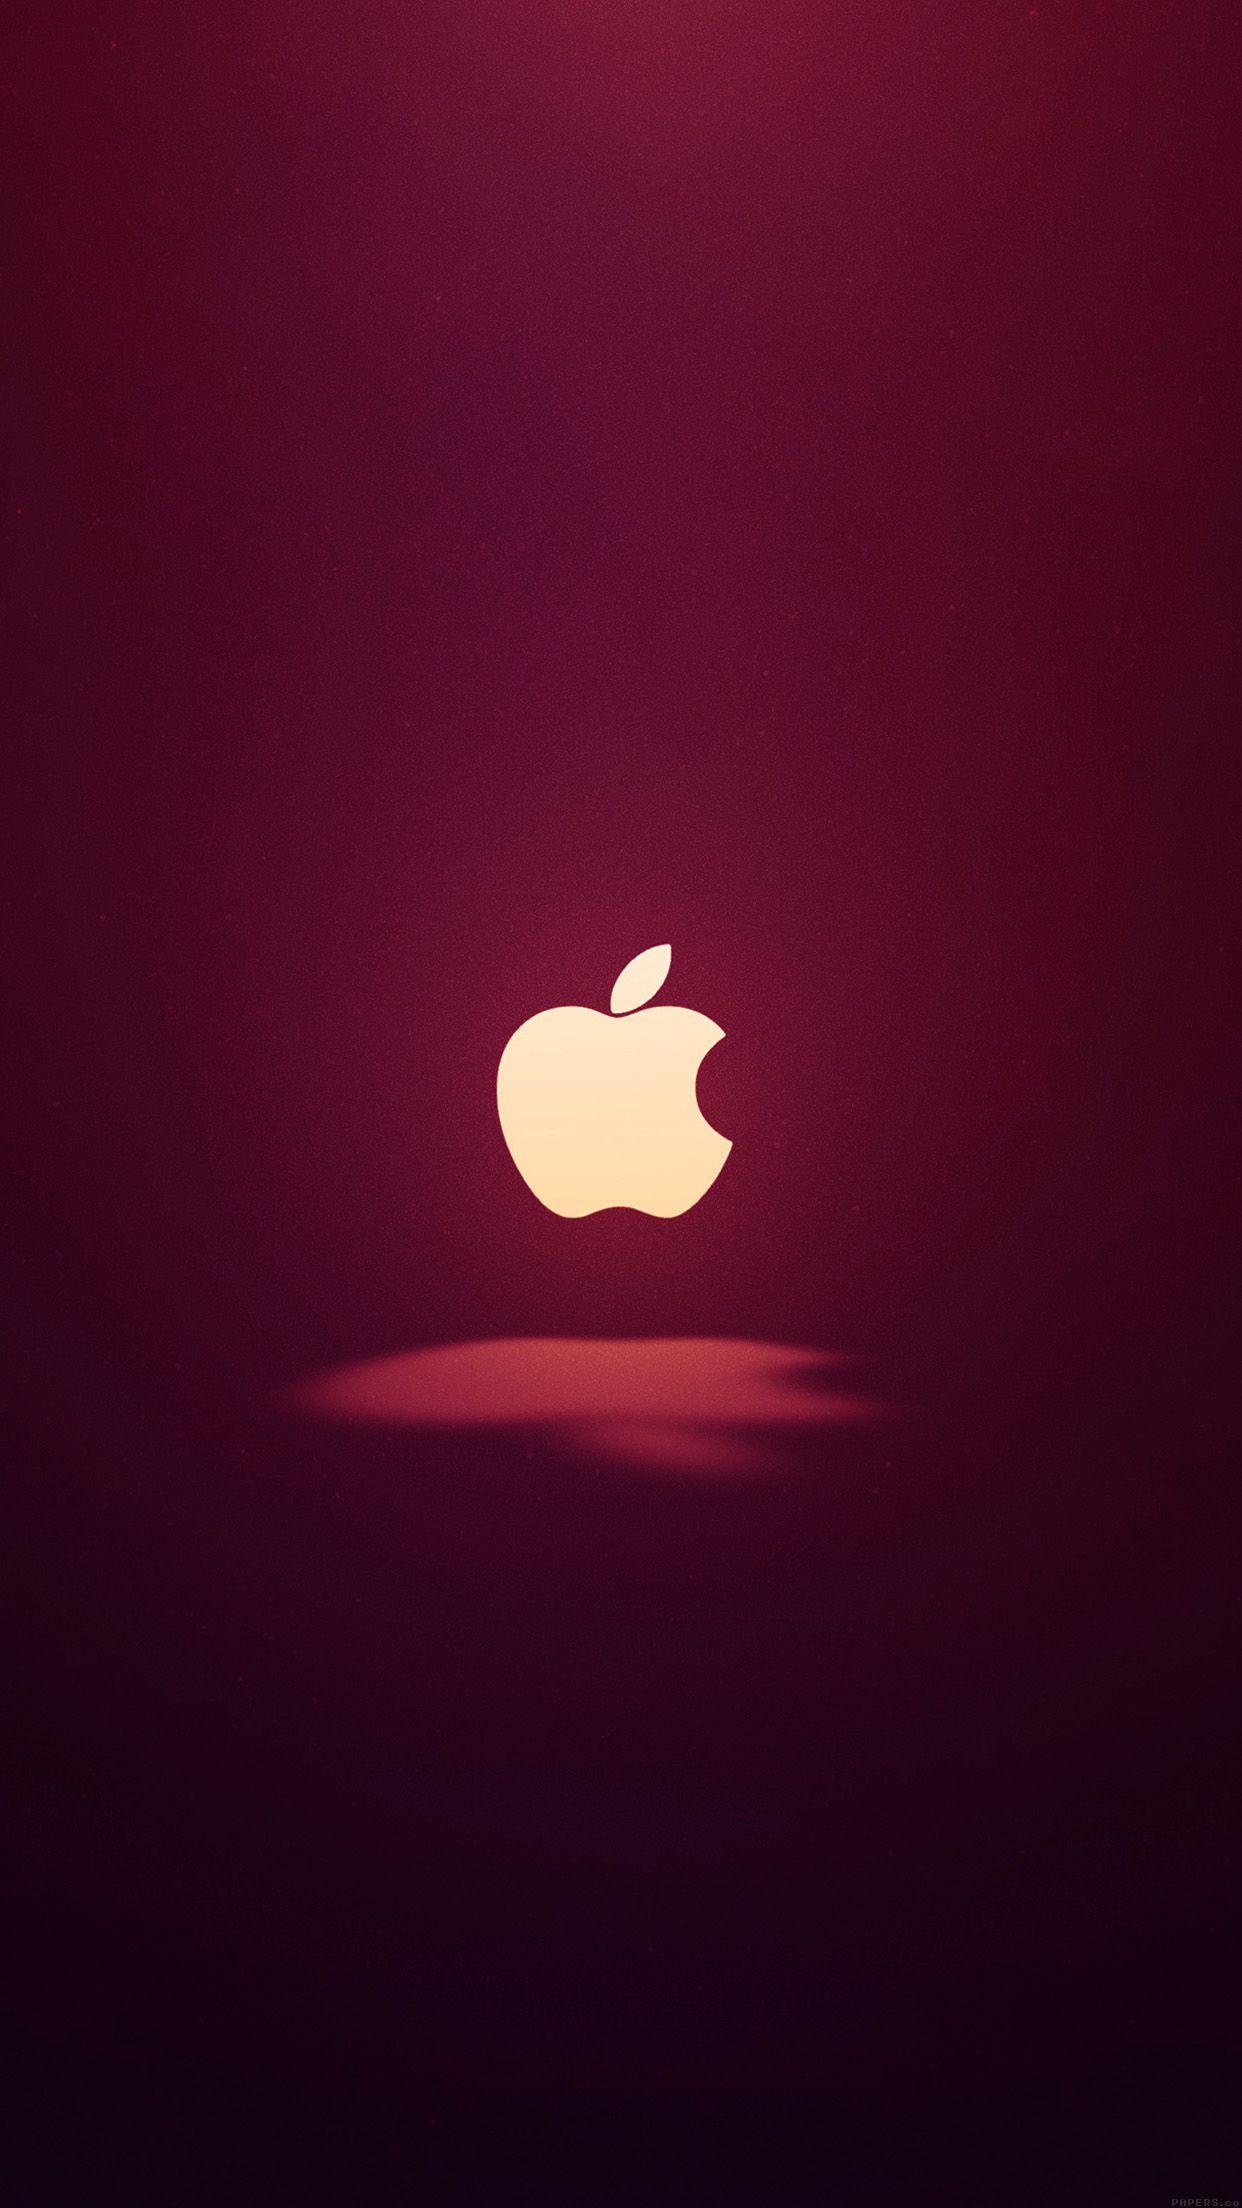 iPhone7 wallpaper. apple logo love mania